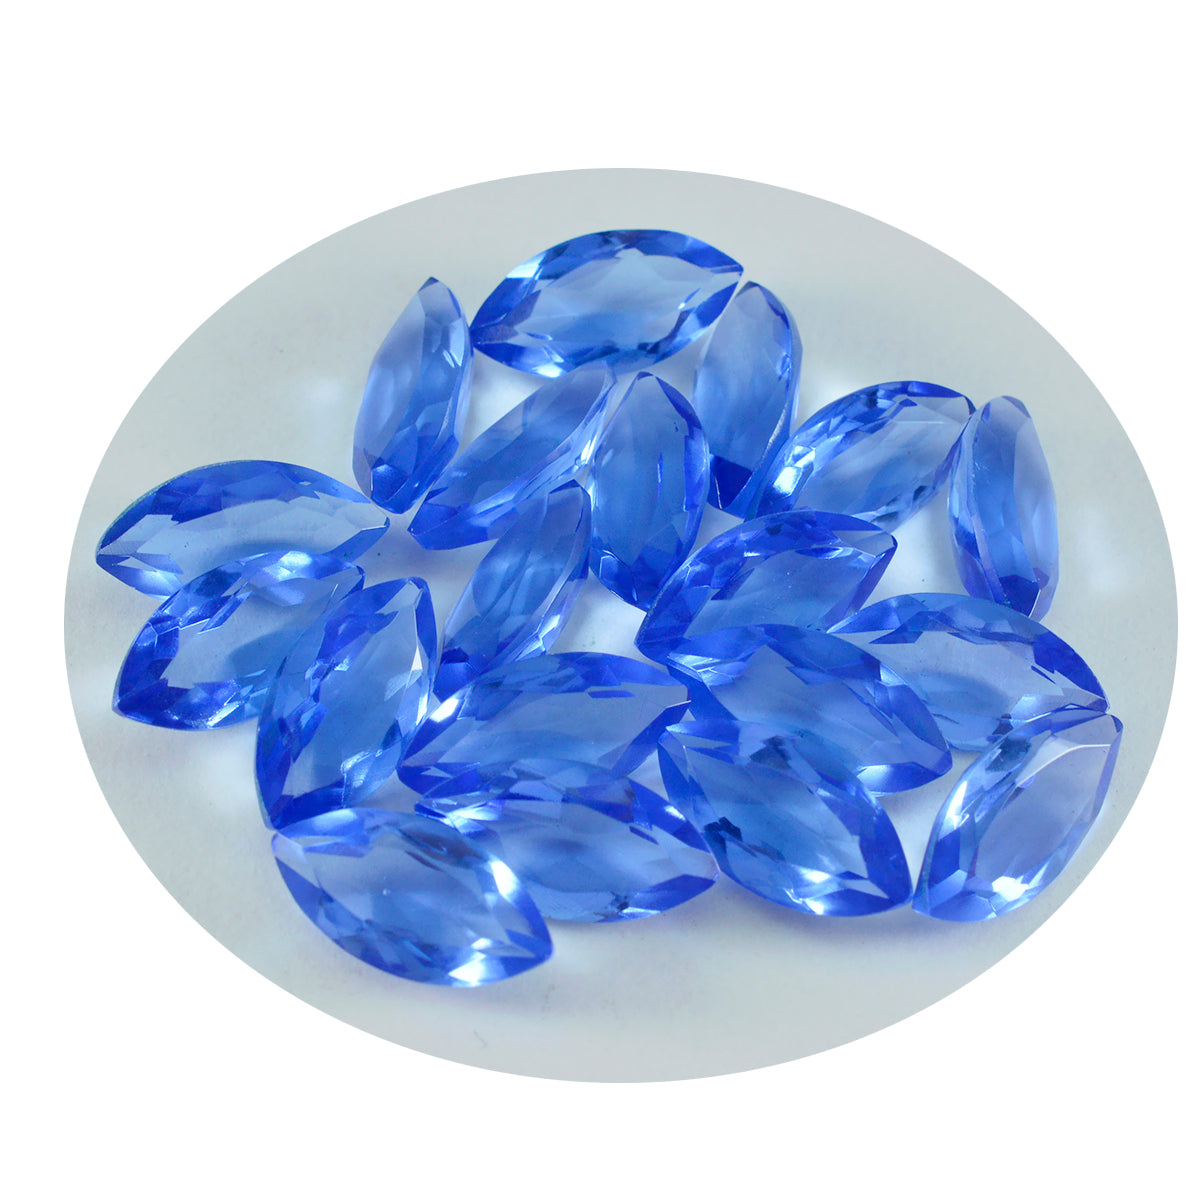 Riyogems 1PC Blue Sapphire CZ Faceted 5x10 mm Marquise Shape superb Quality Loose Gemstone